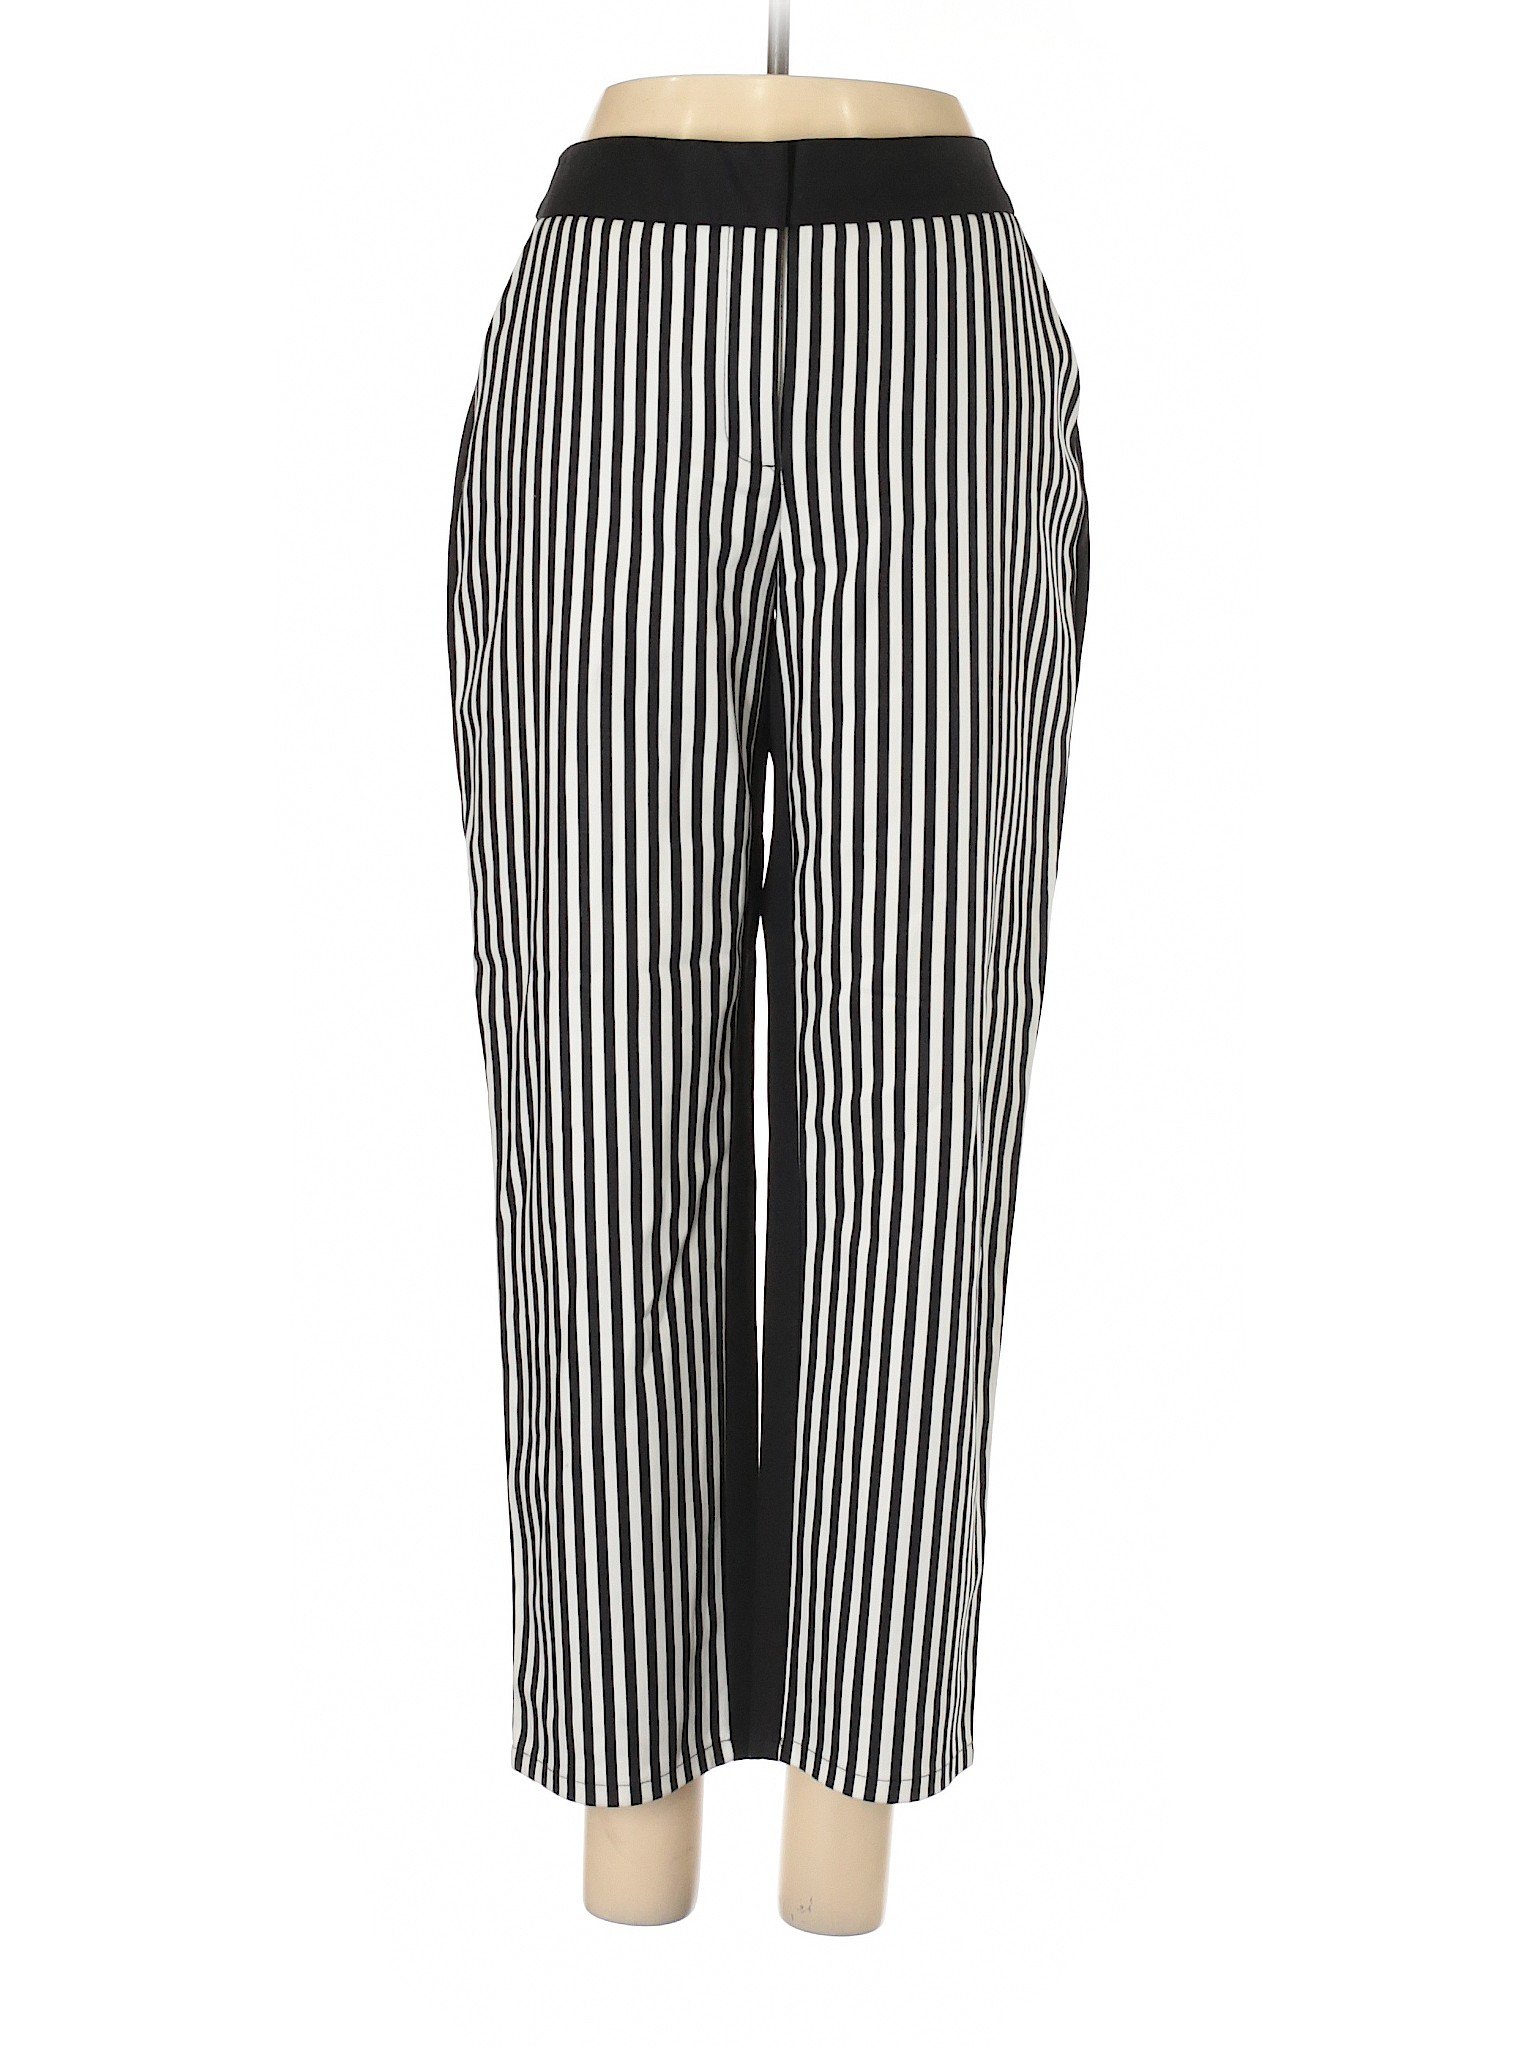 Chico's Women Black Dress Pants S | eBay